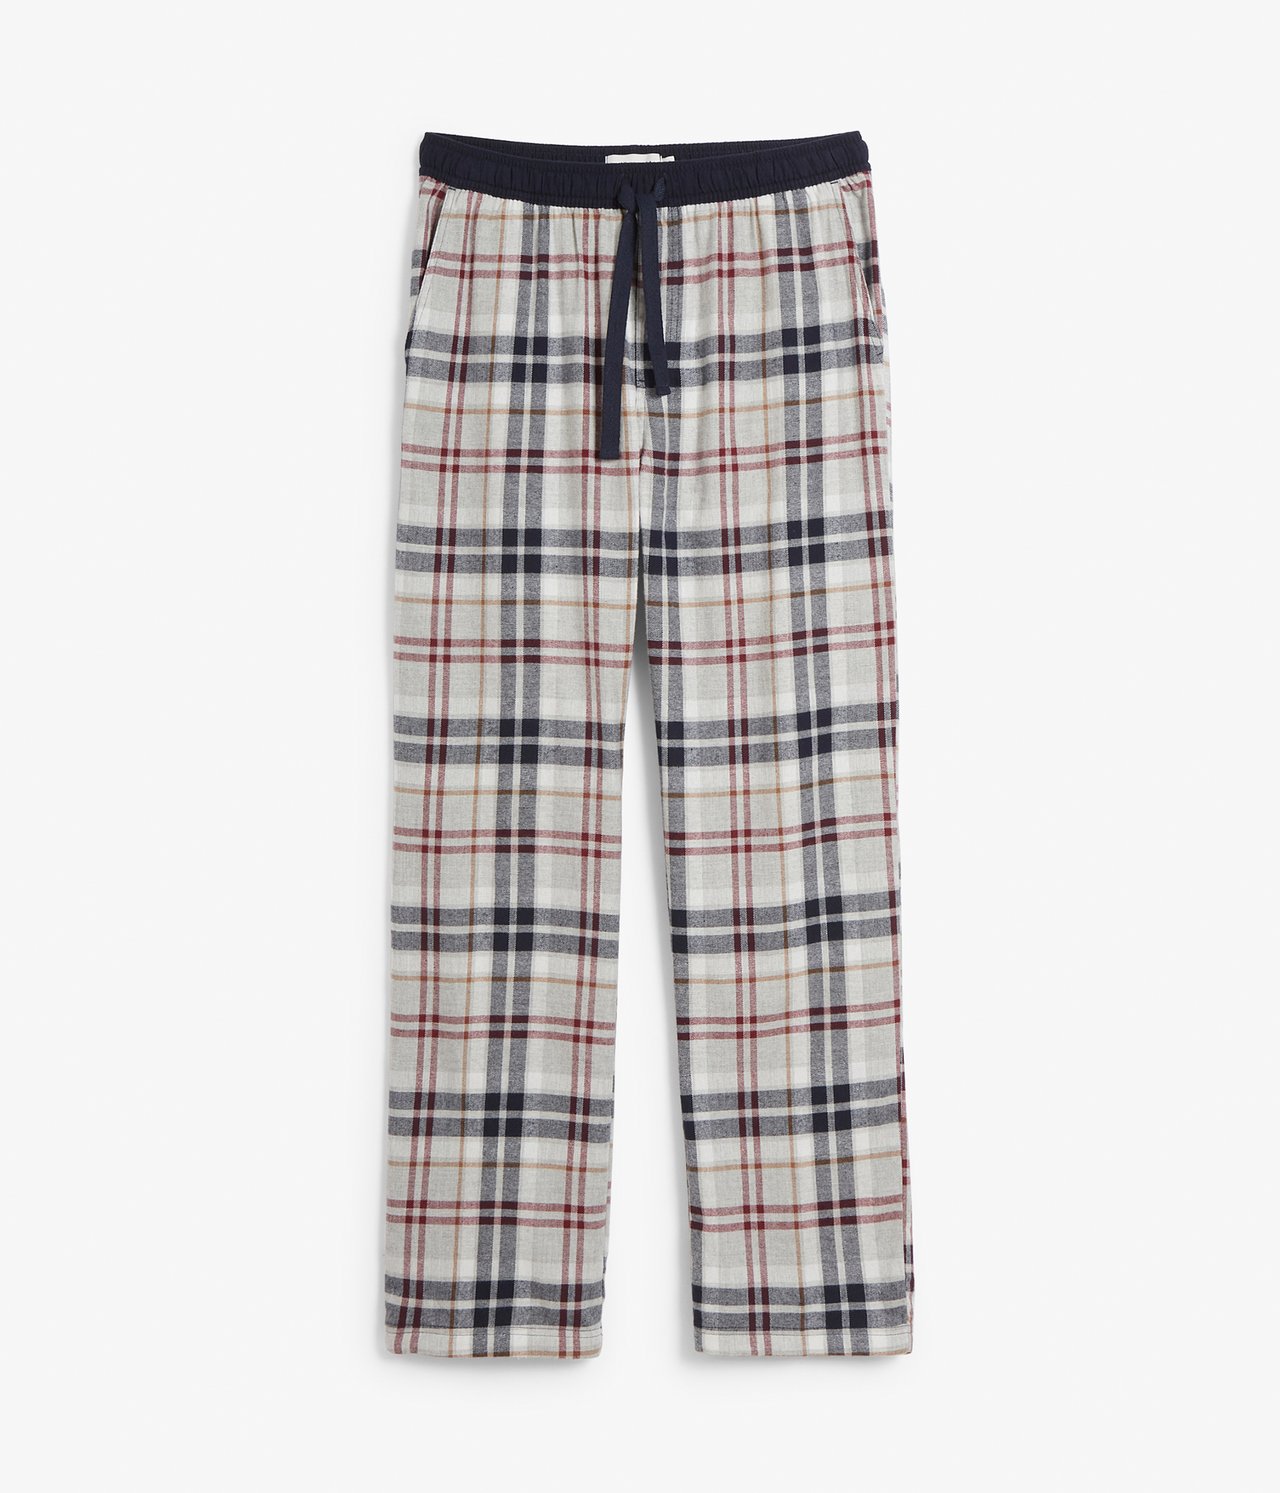 Pyjamasbukse Lysegrå - L - 4